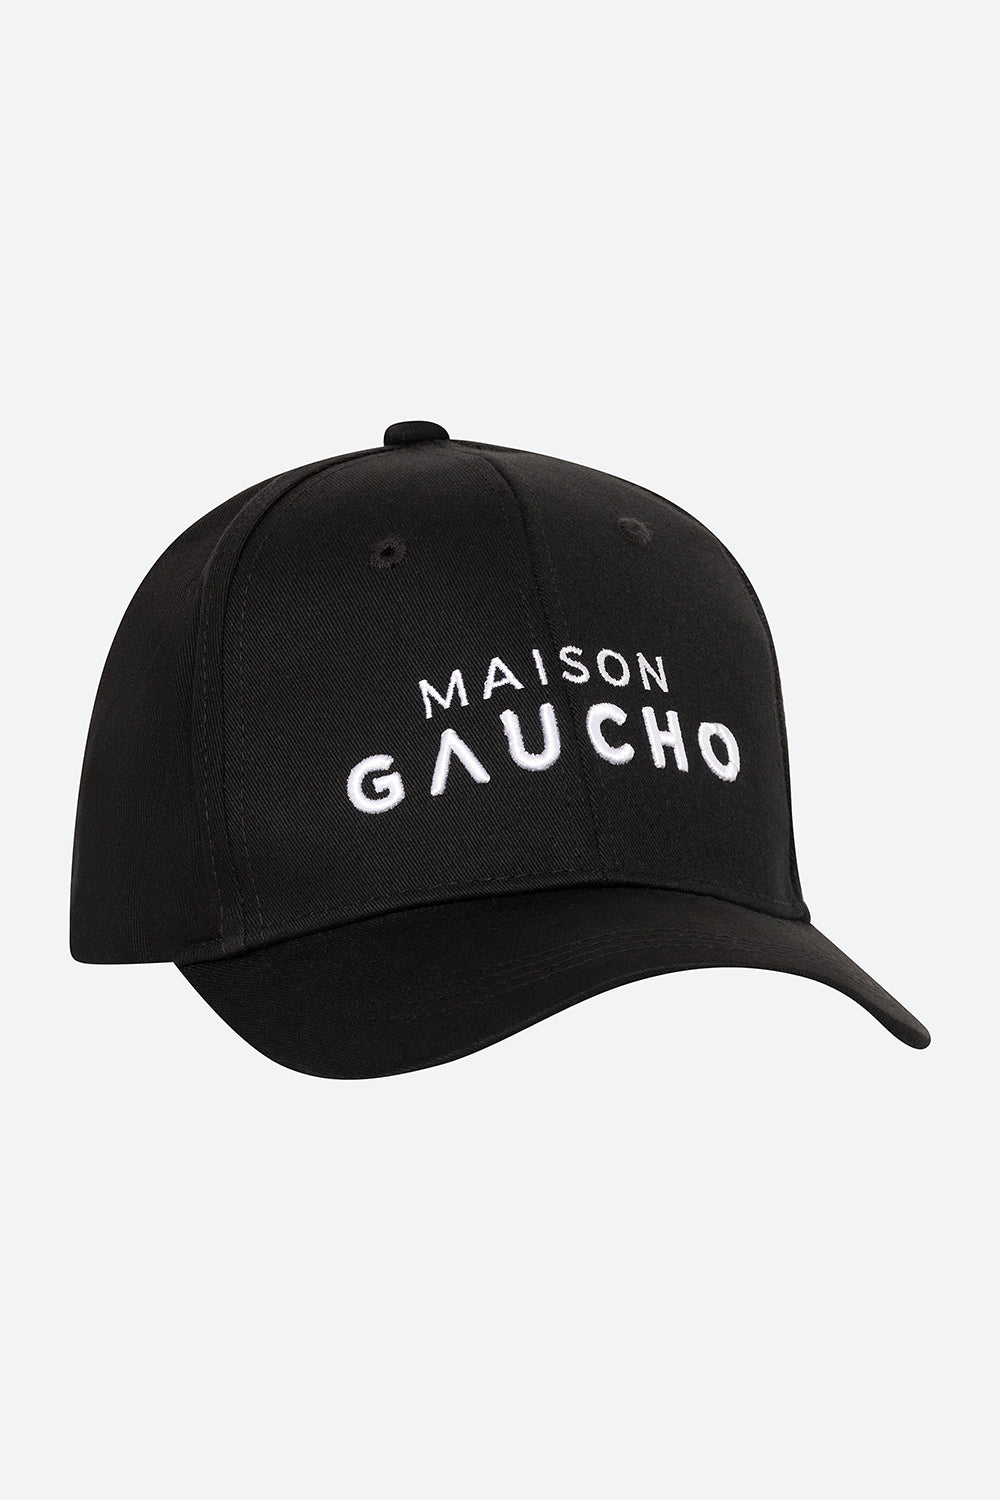 Maison Gaucho Cap in Black White